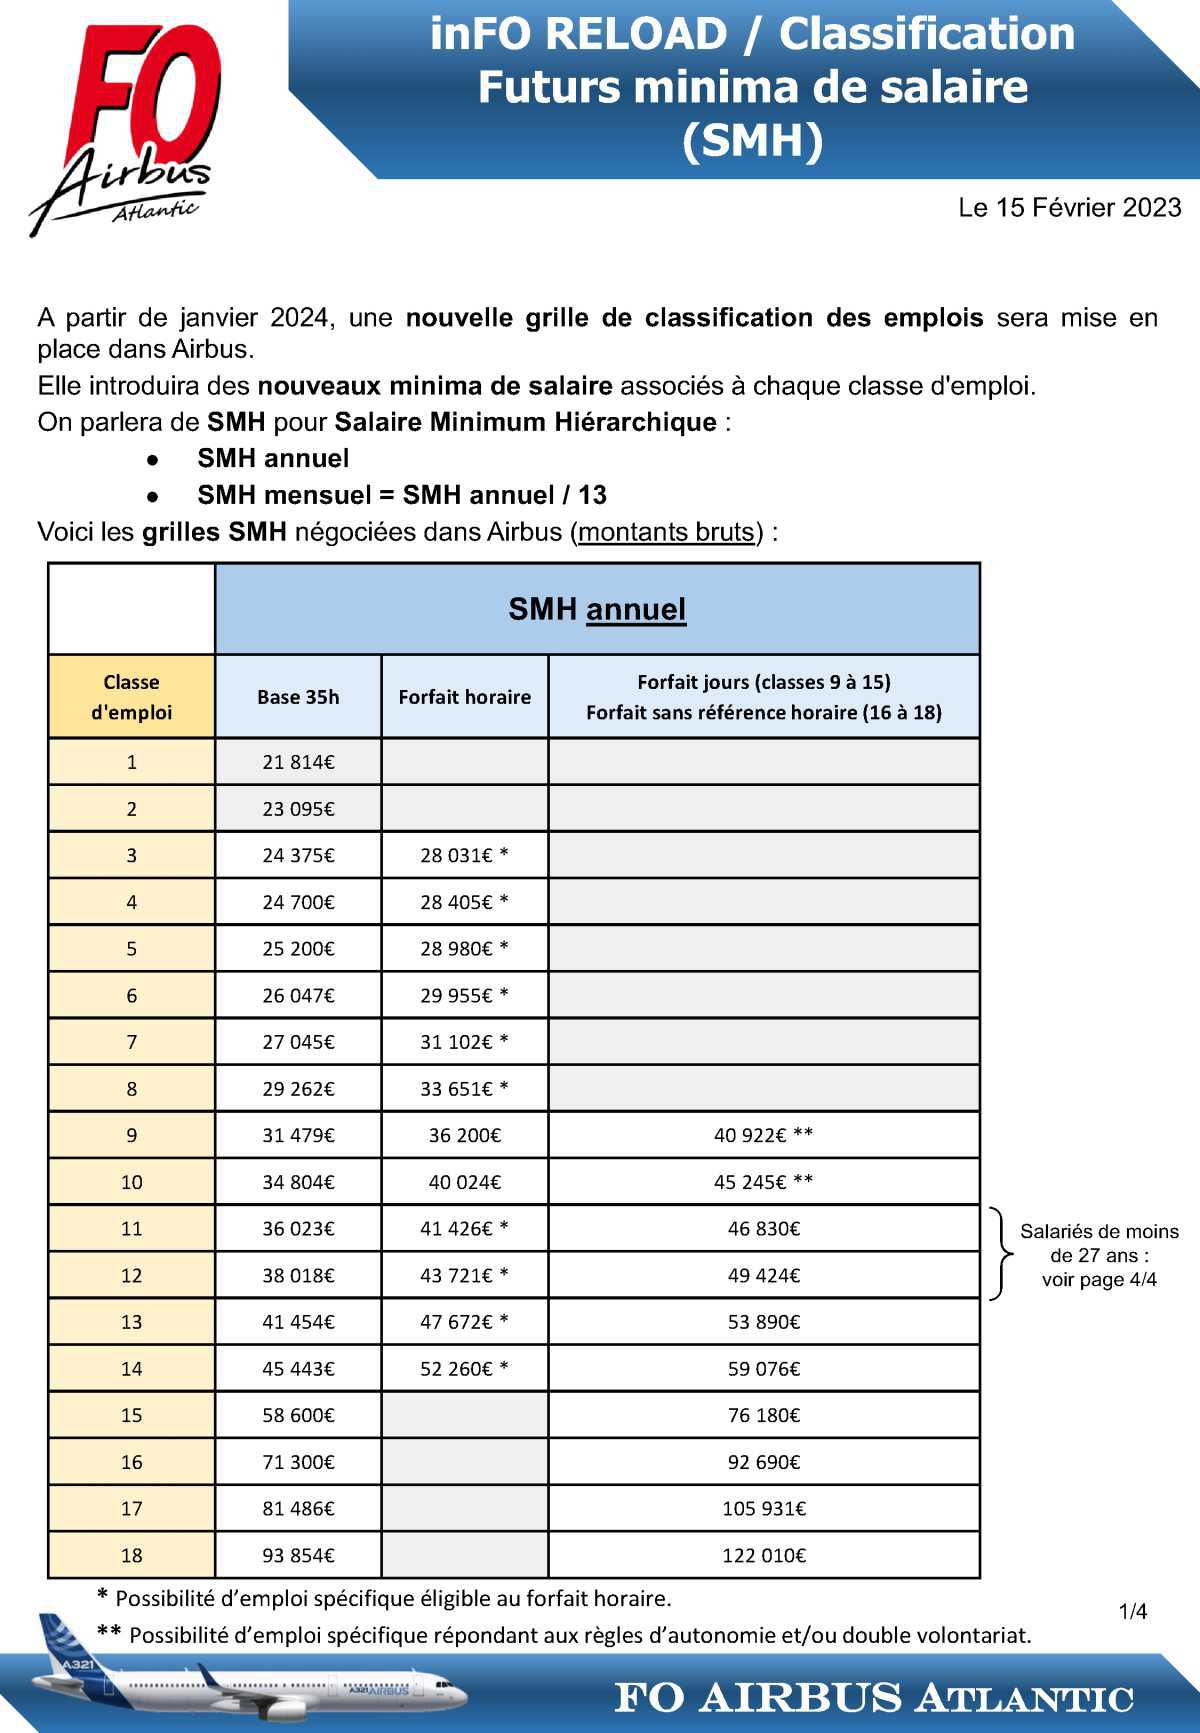 InFO RELOAD/Classification : futurs minima de salaire (SMH) version 2